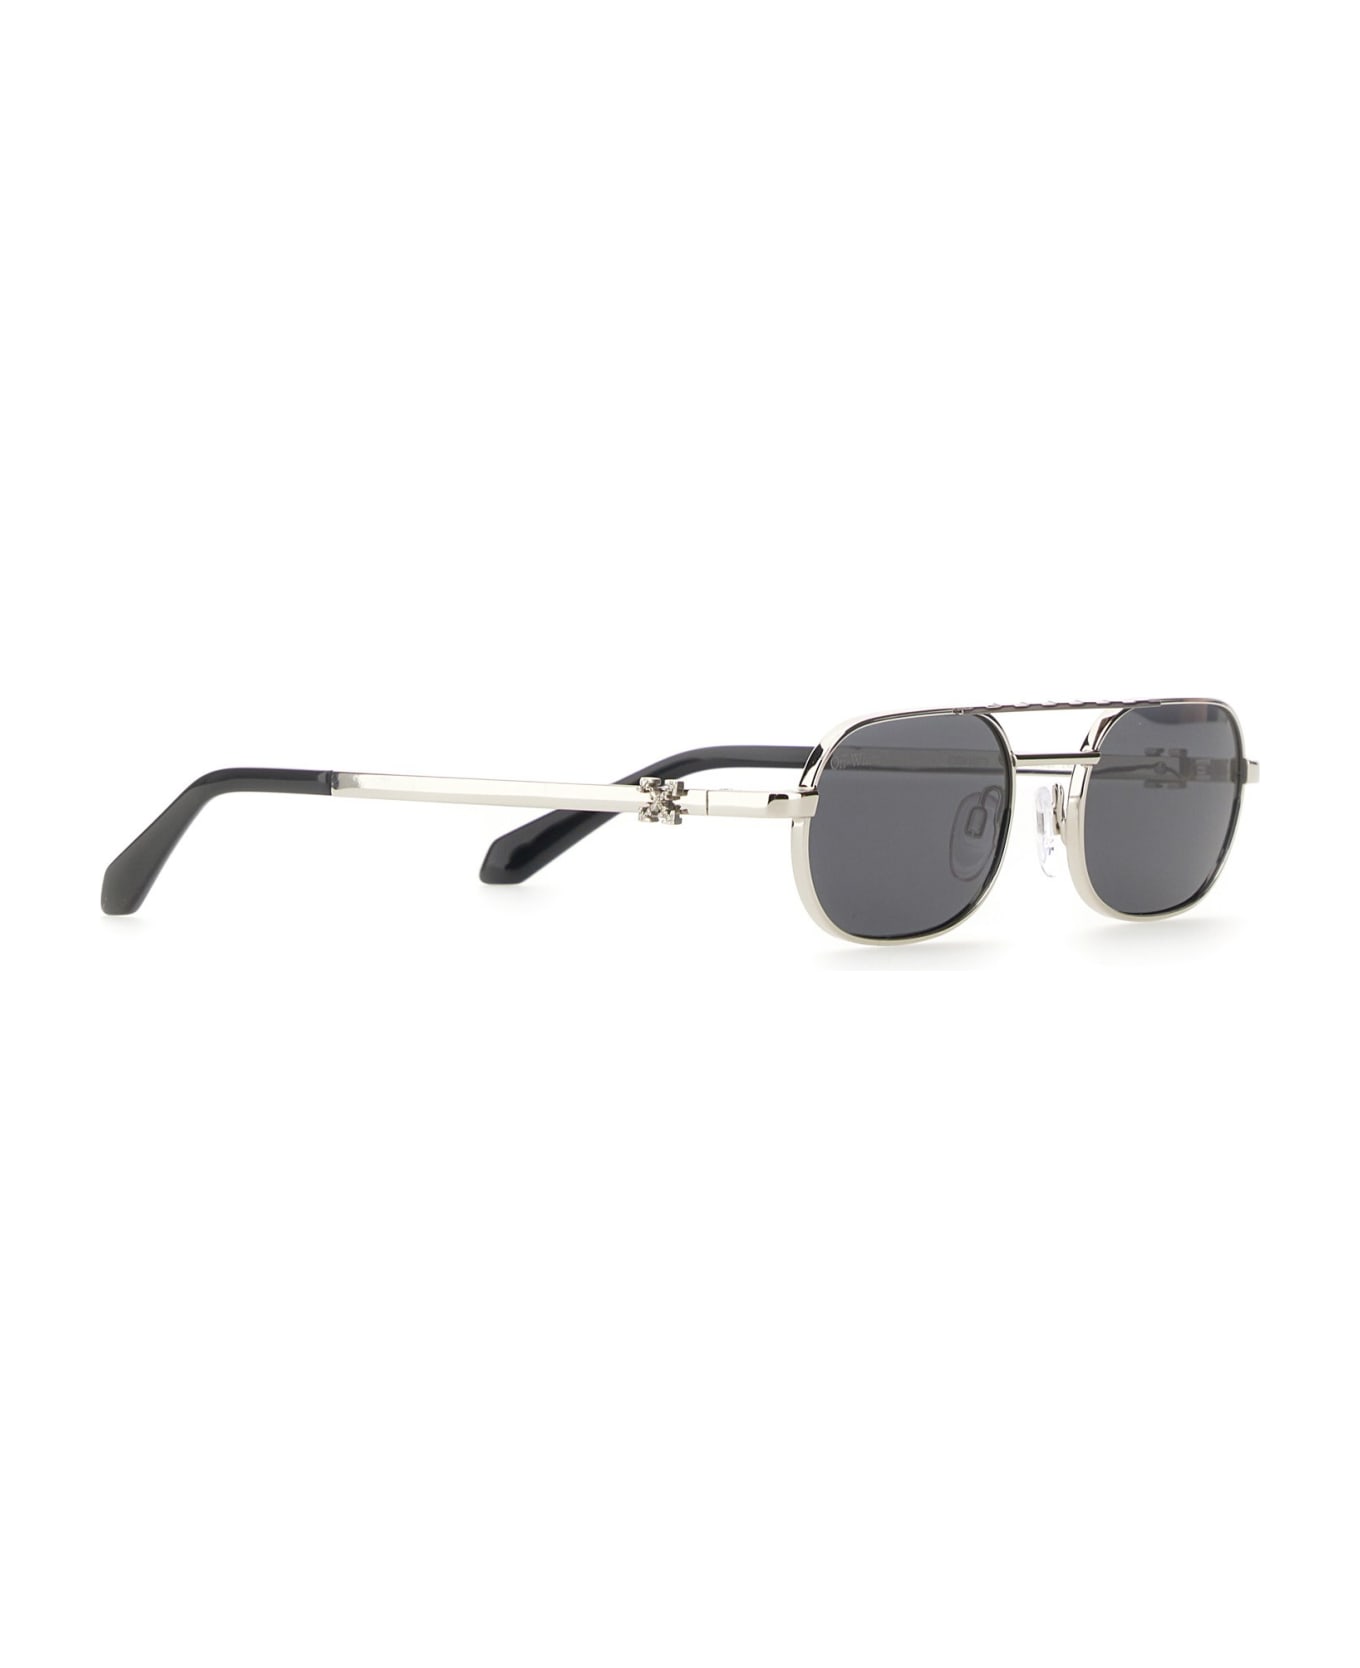 Off-White Baltimore Sunglasses - Argento サングラス